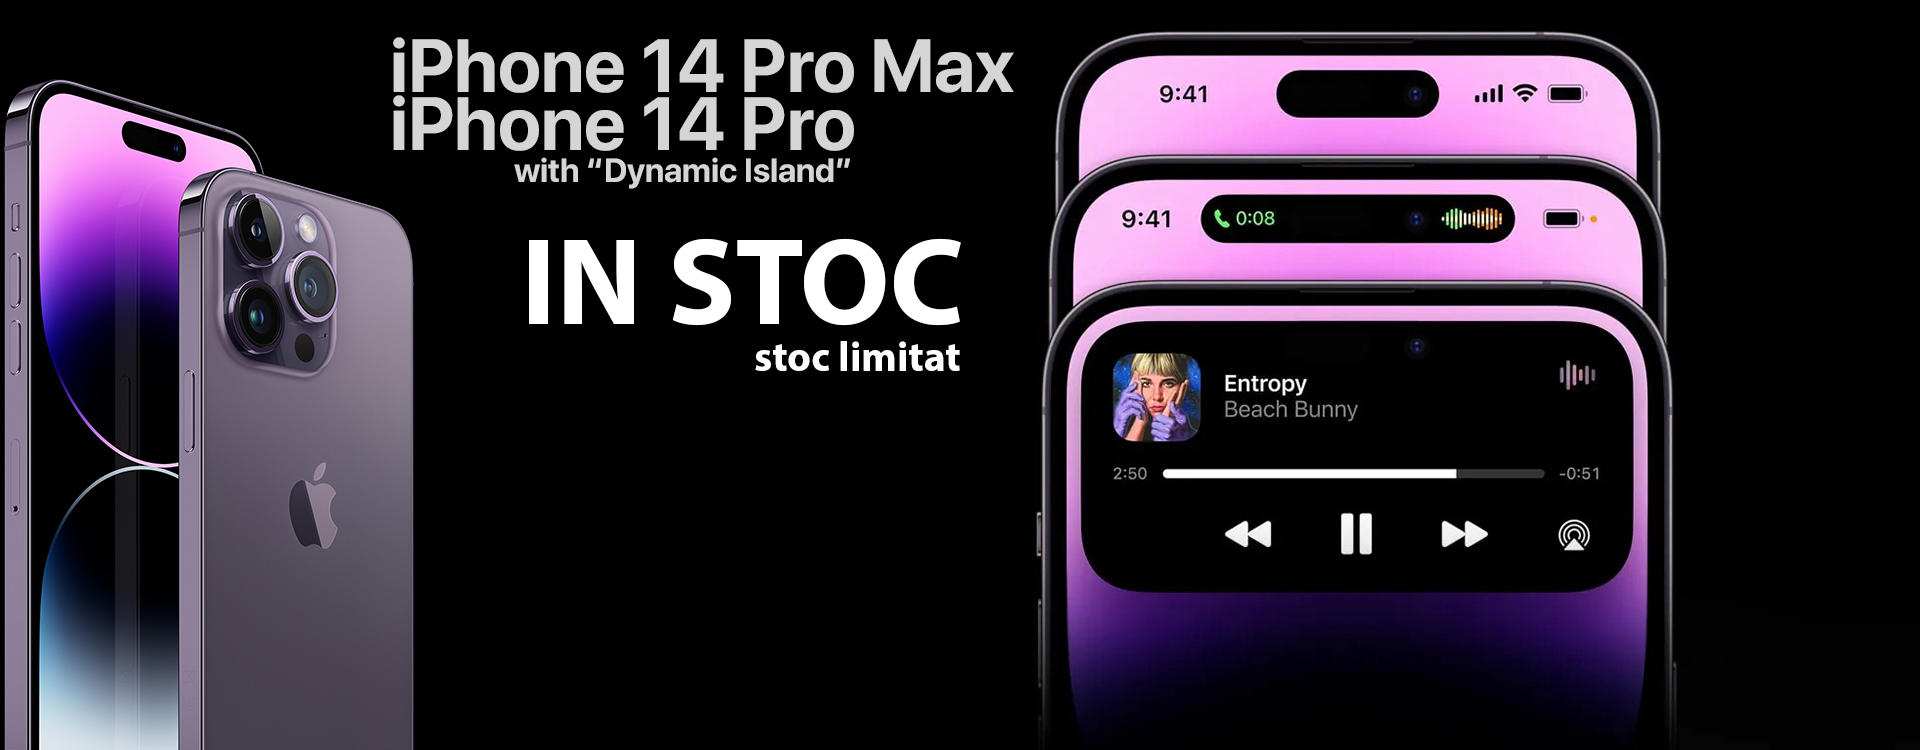 iPhone 14 Pro Max IN STOC